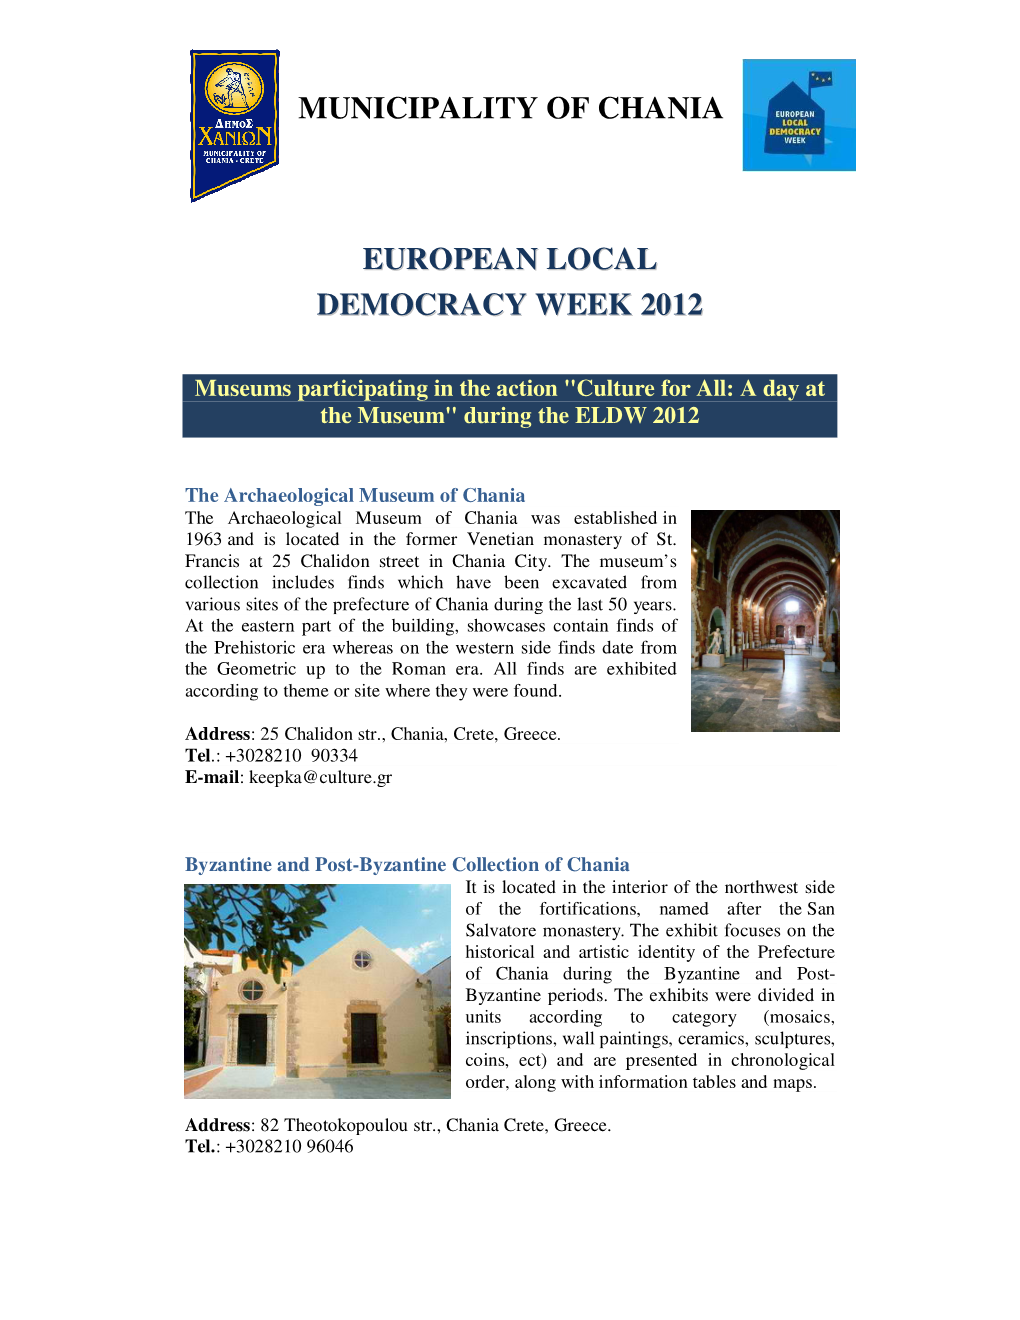 Municipality of Chania European Local Democracy